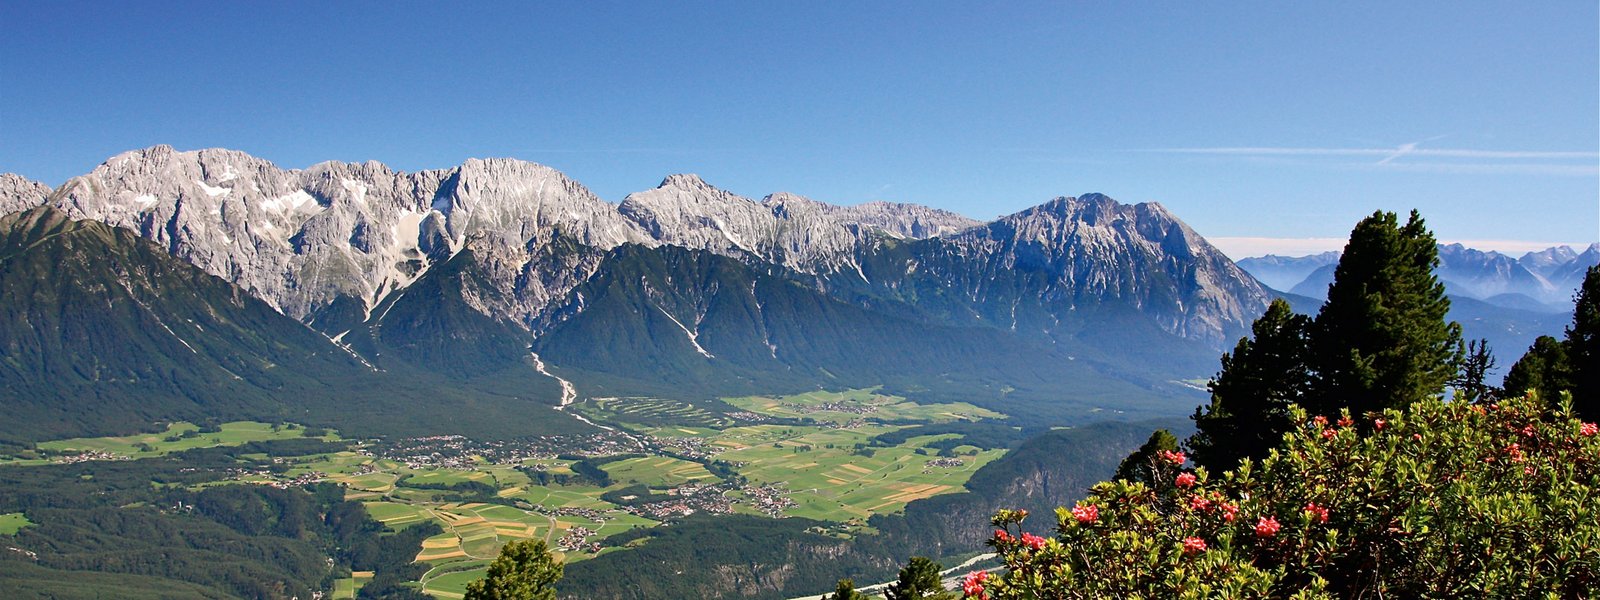 Sommerurlaub in Tirol